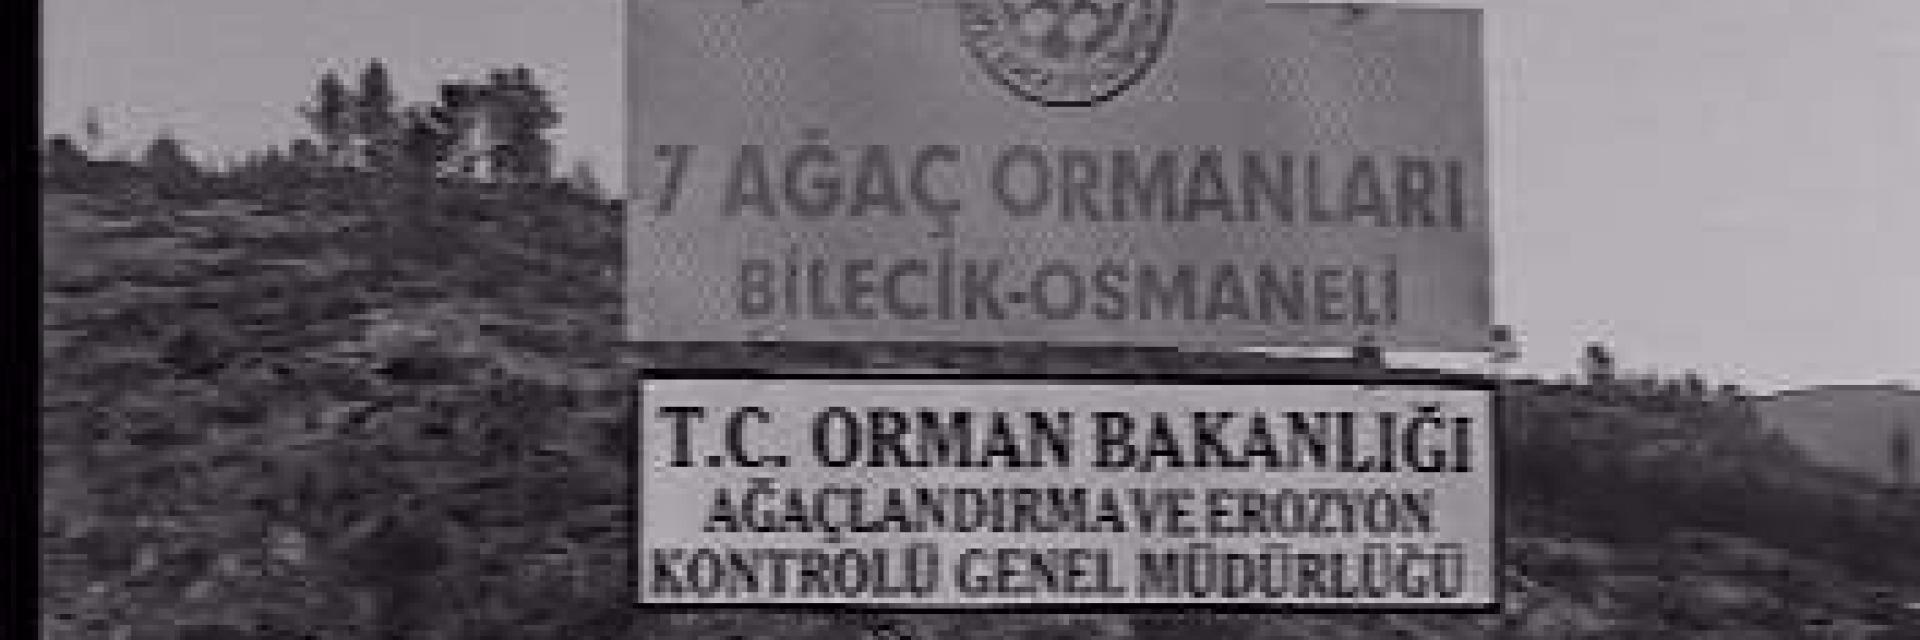 Bilecik / Osmaneli - 2001